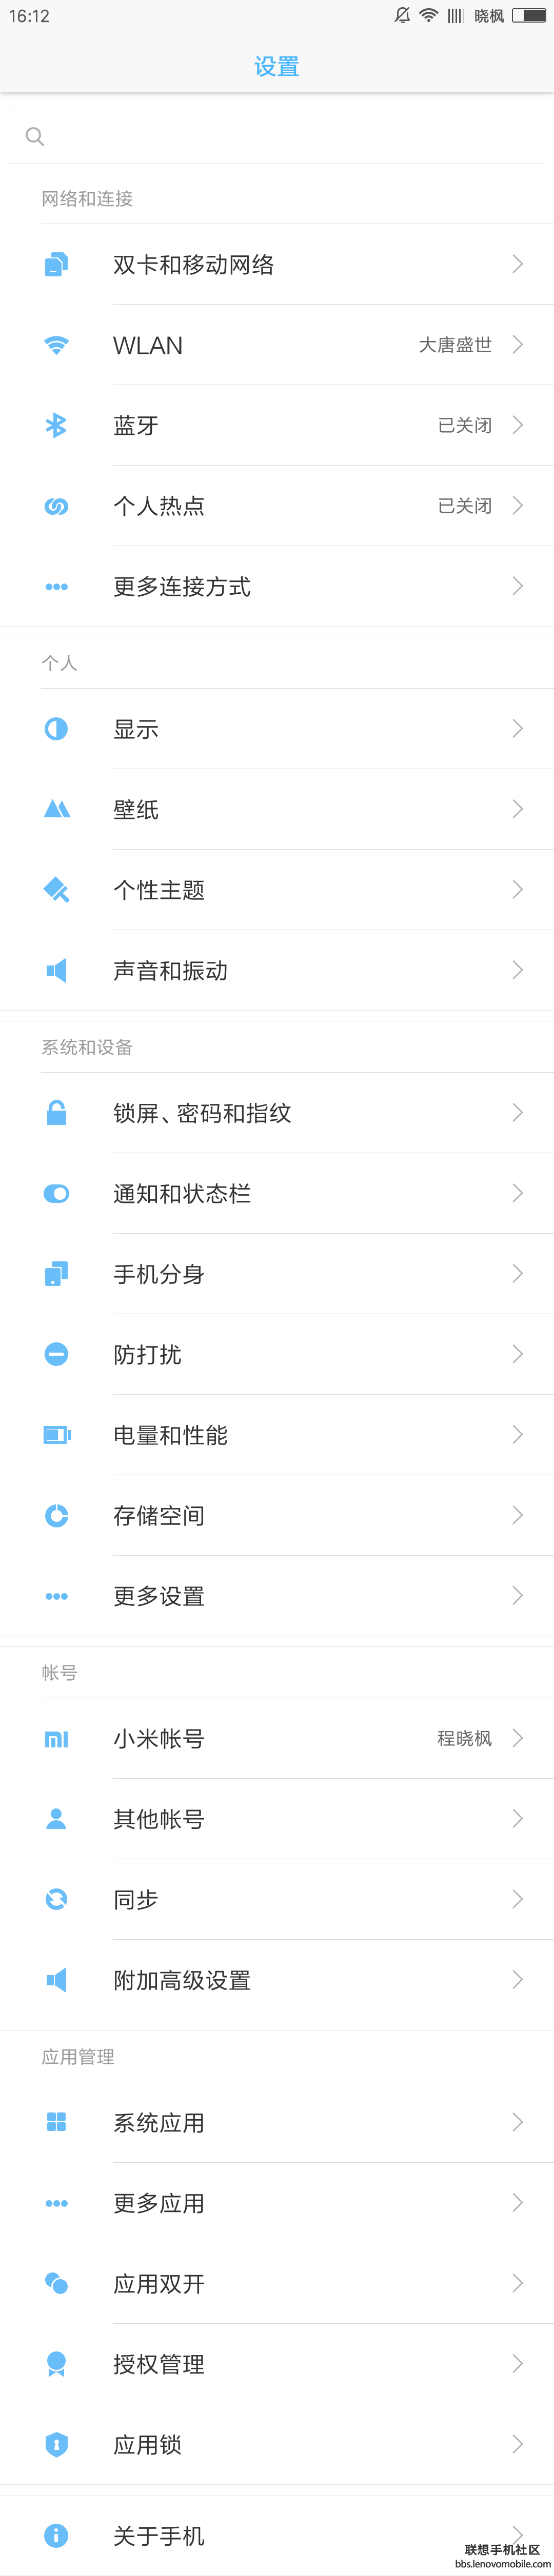 Screenshot_2017-02-07-16-12-27-453_com.android.settings.png